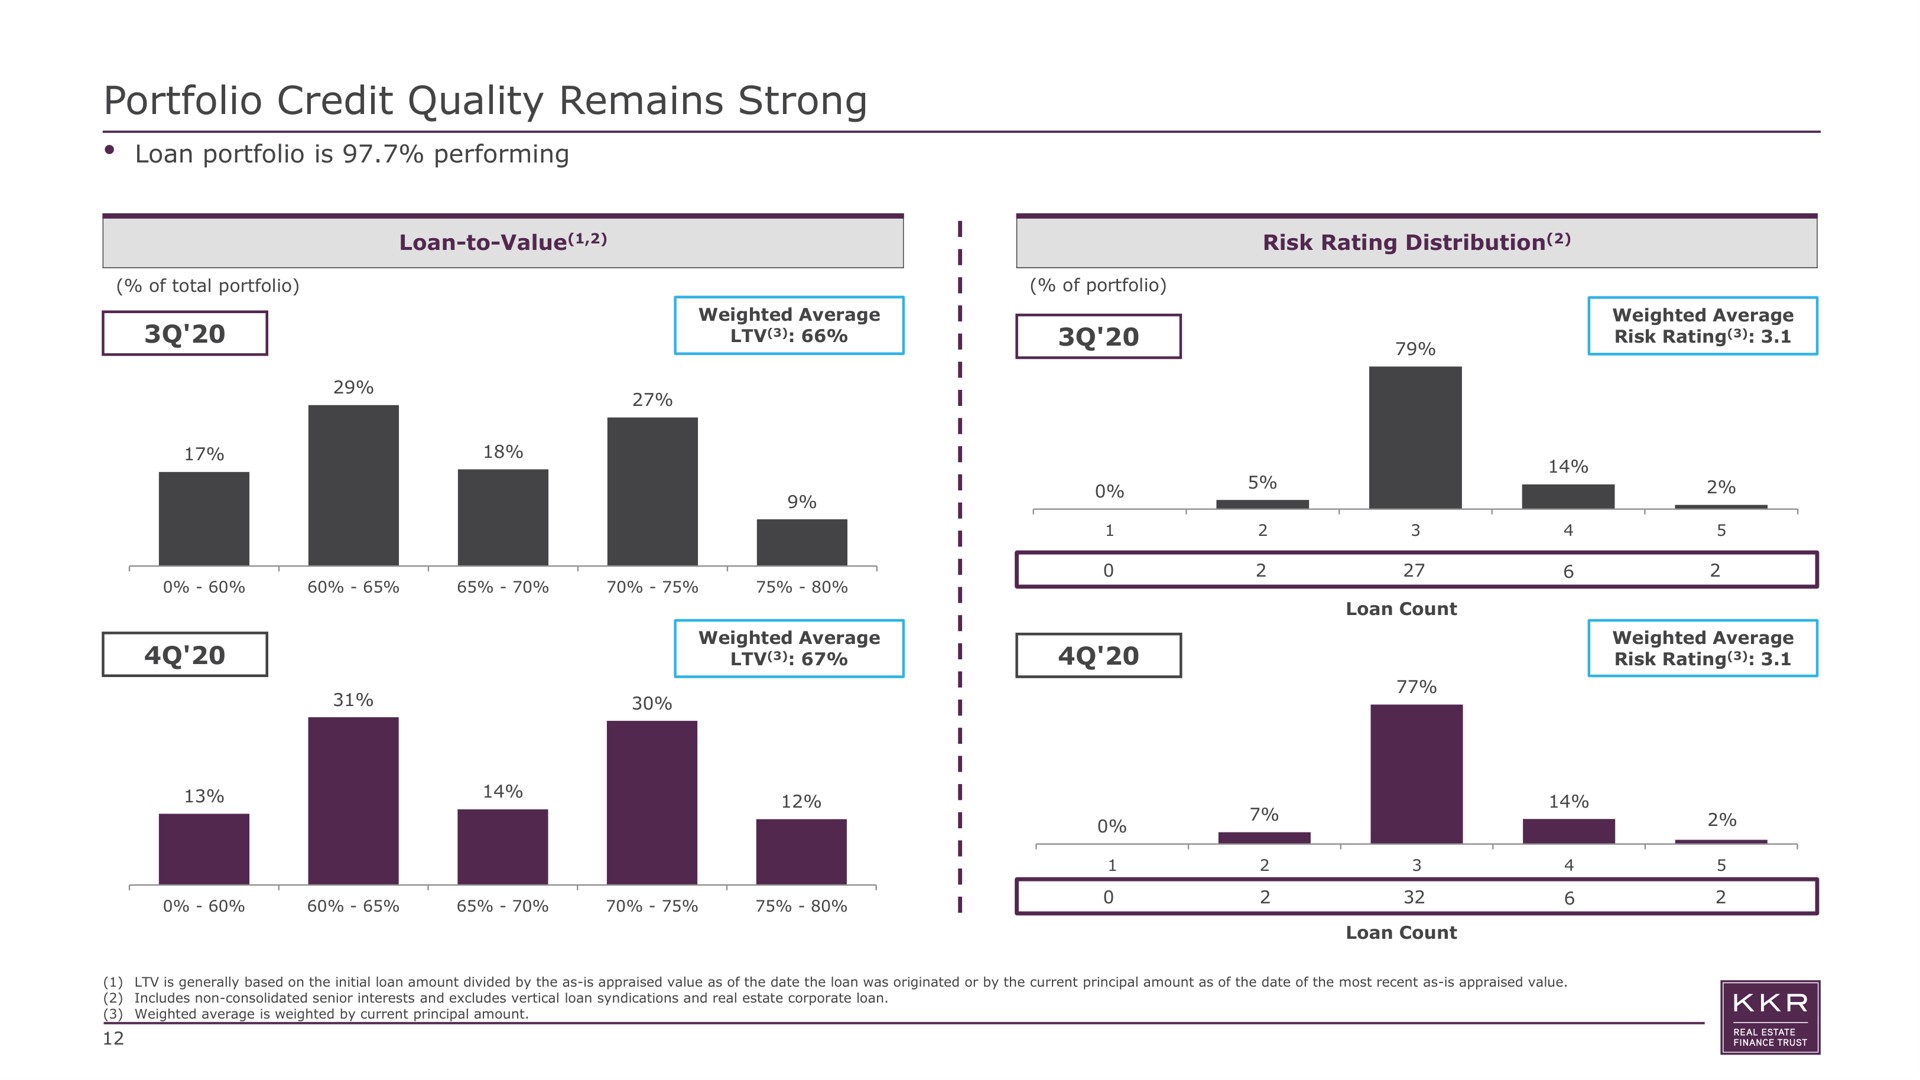 portfolio credit quality remains strong loan portfolio is performing loan to value risk rating distribution | KKR Real Estate Finance Trust